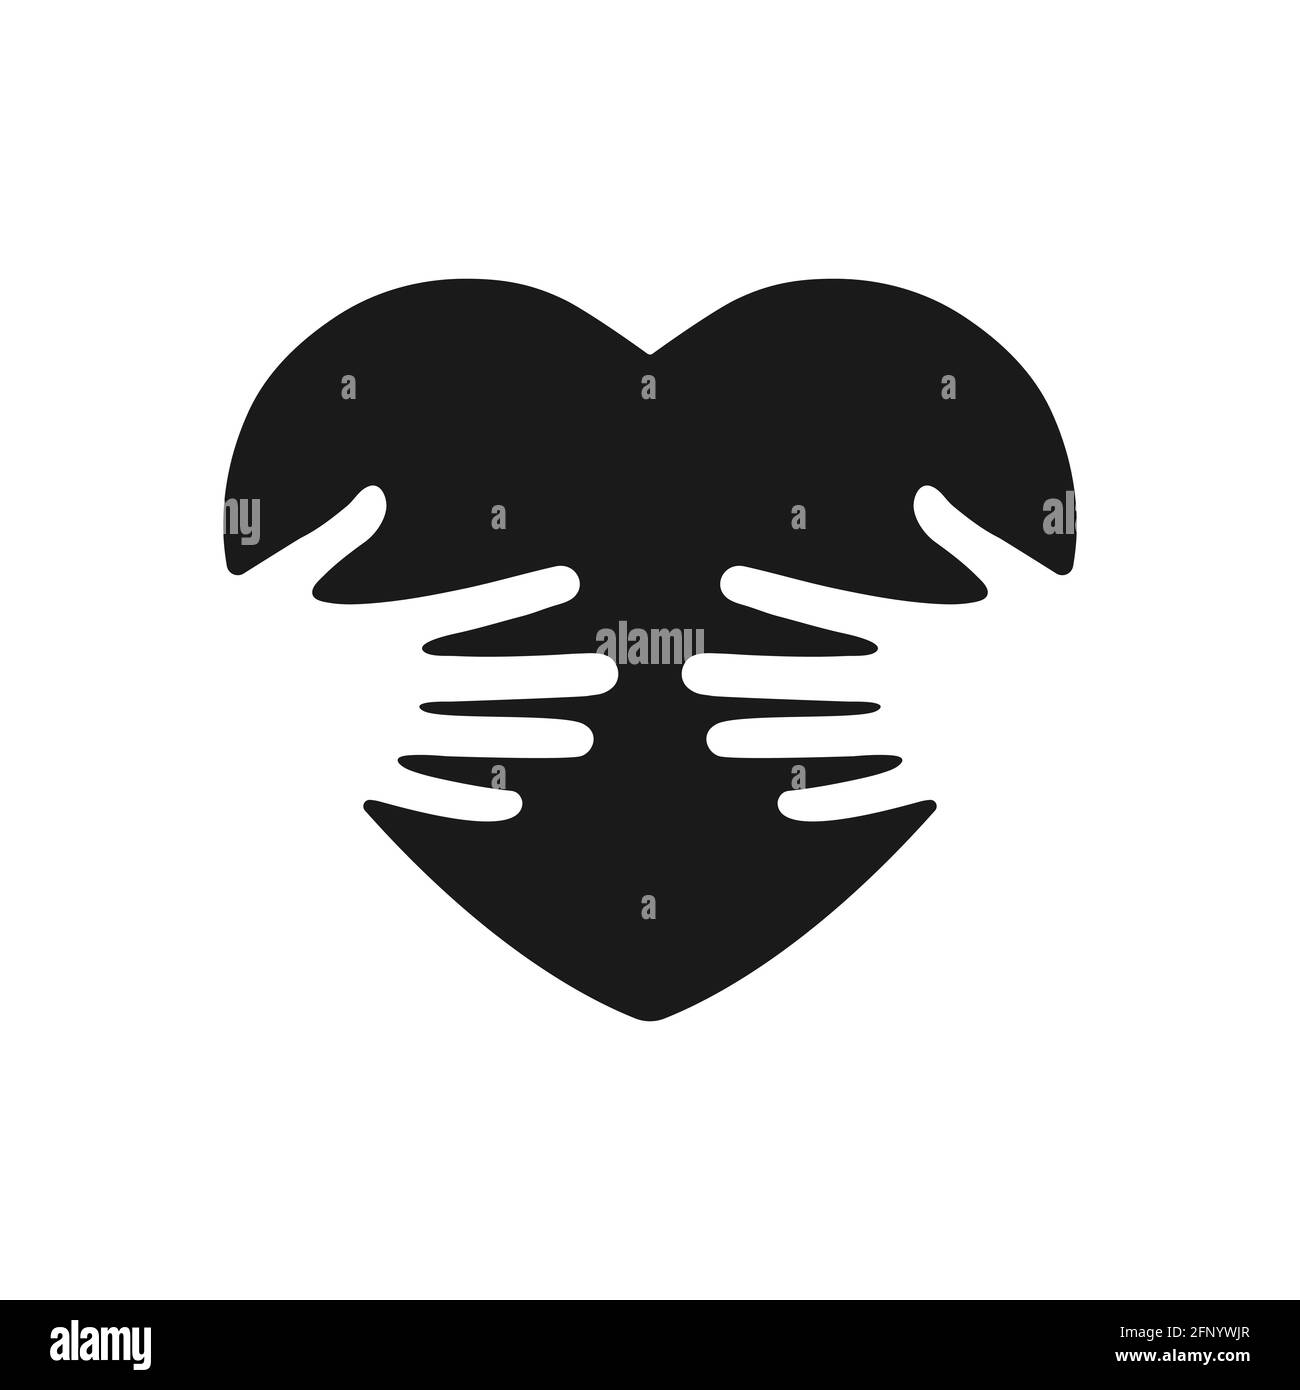 Hands hugging heart vector illustration. Embracing concept. Voluntary symbol black silhouette. Stock Vector